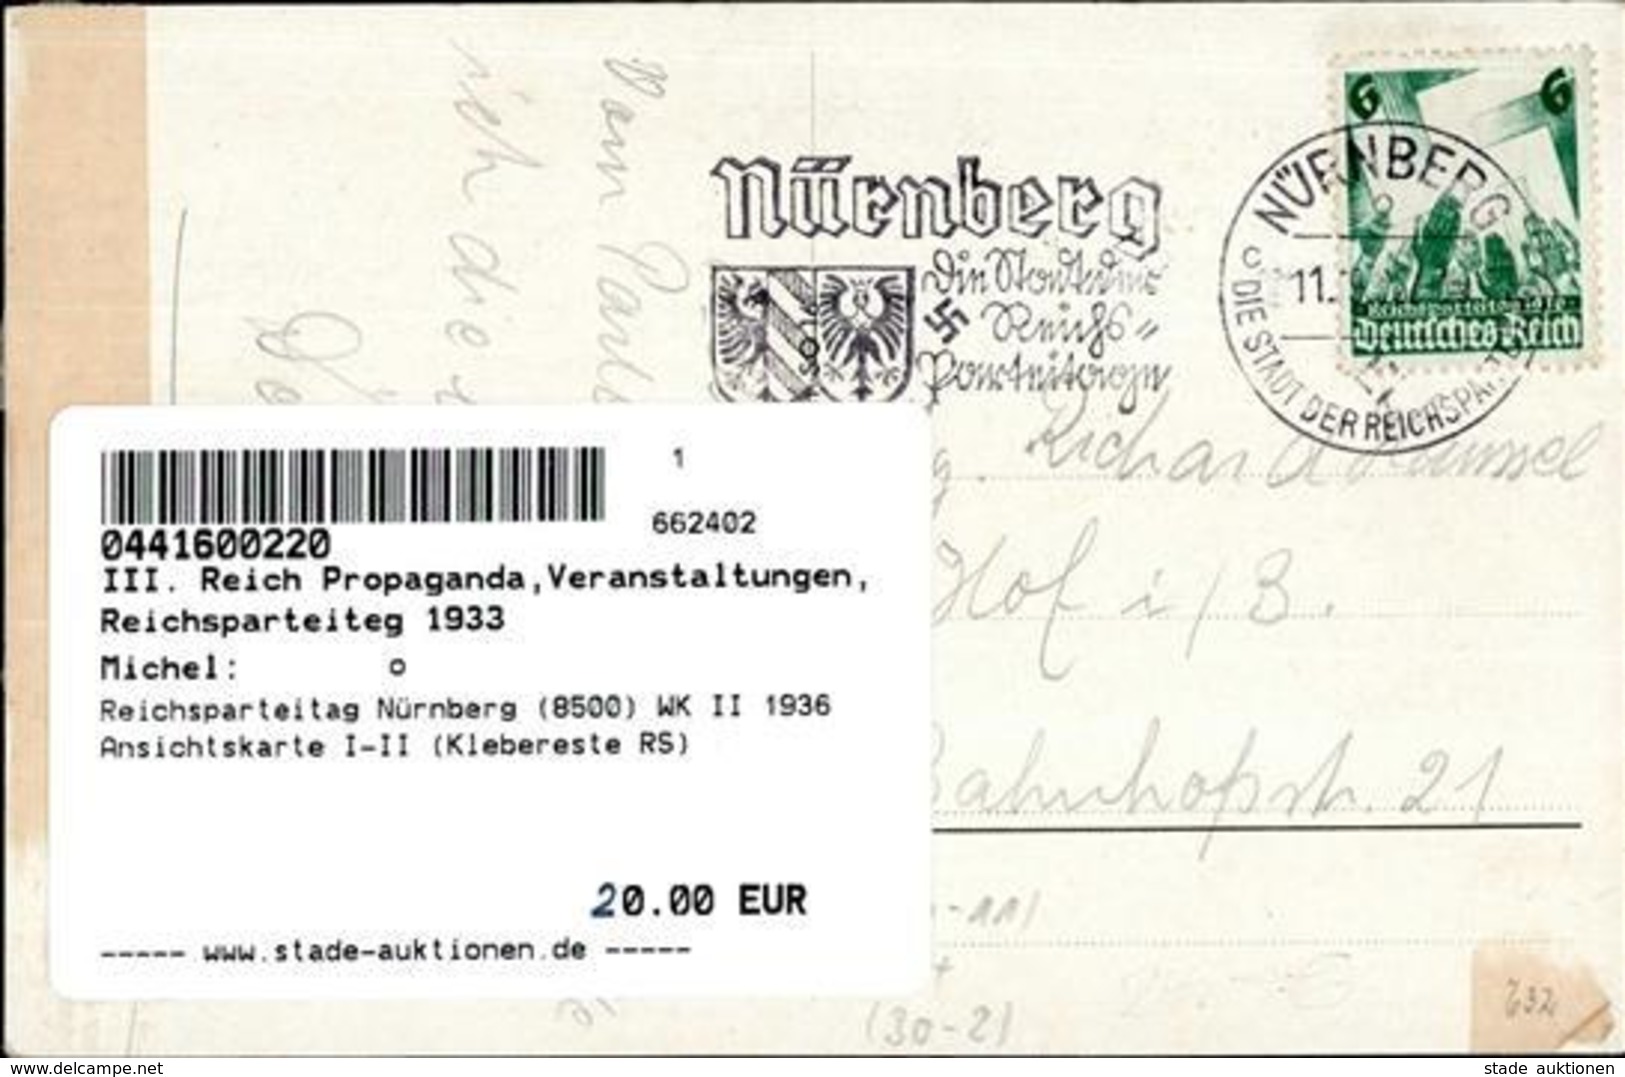 Reichsparteitag Nürnberg (8500) WK II 1936 Ansichtskarte I-II (Klebereste RS) - Guerra 1939-45